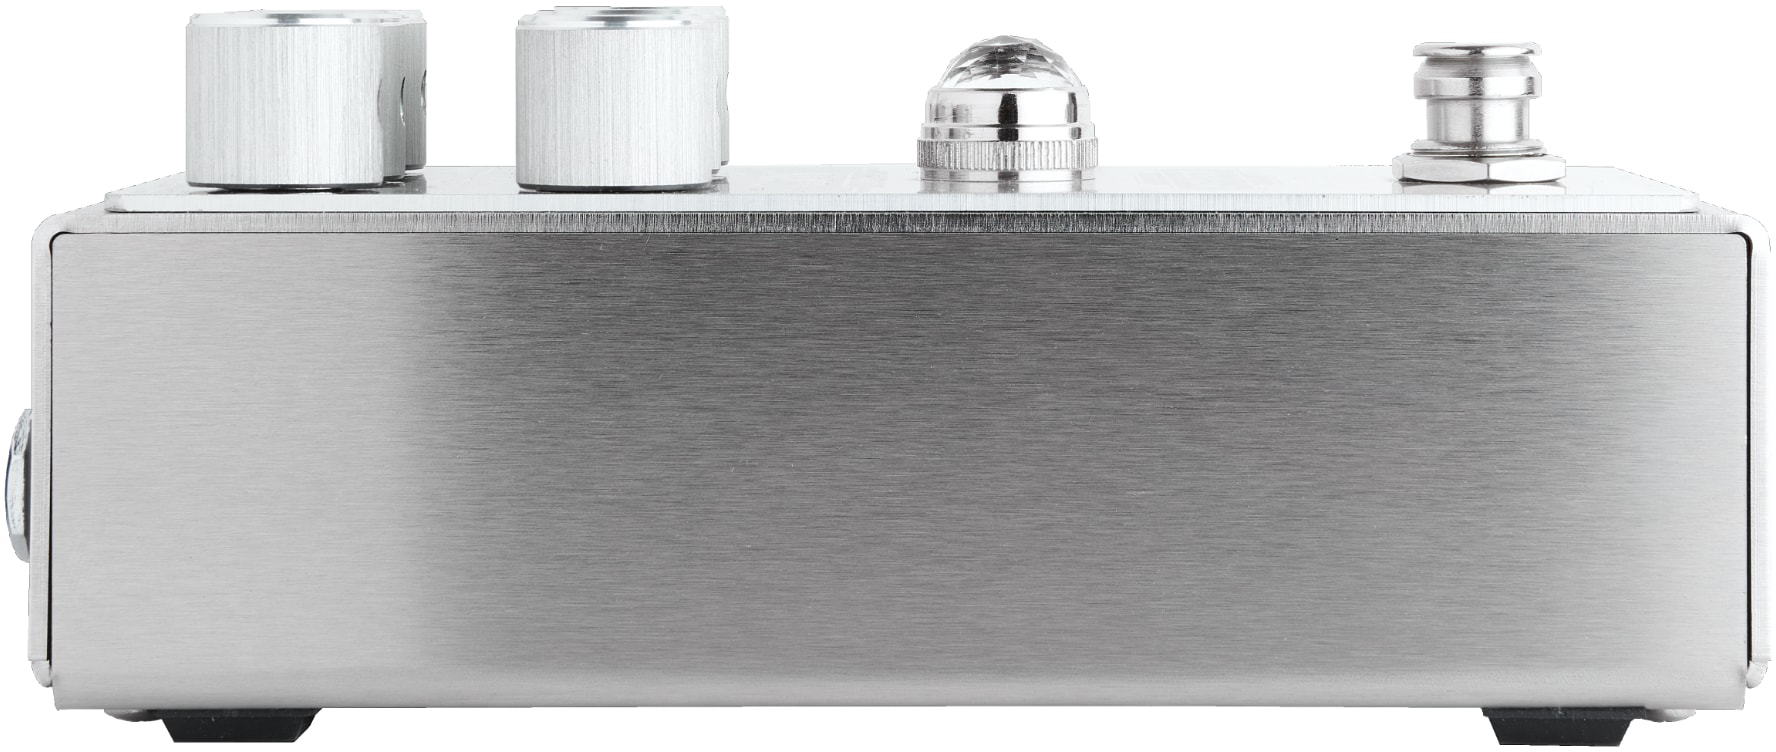 Origin Effects Cali76 Compact Deluxe Laser Engraved Ltd - Kompressor/Sustain/Noise gate Effektpedal - Variation 1